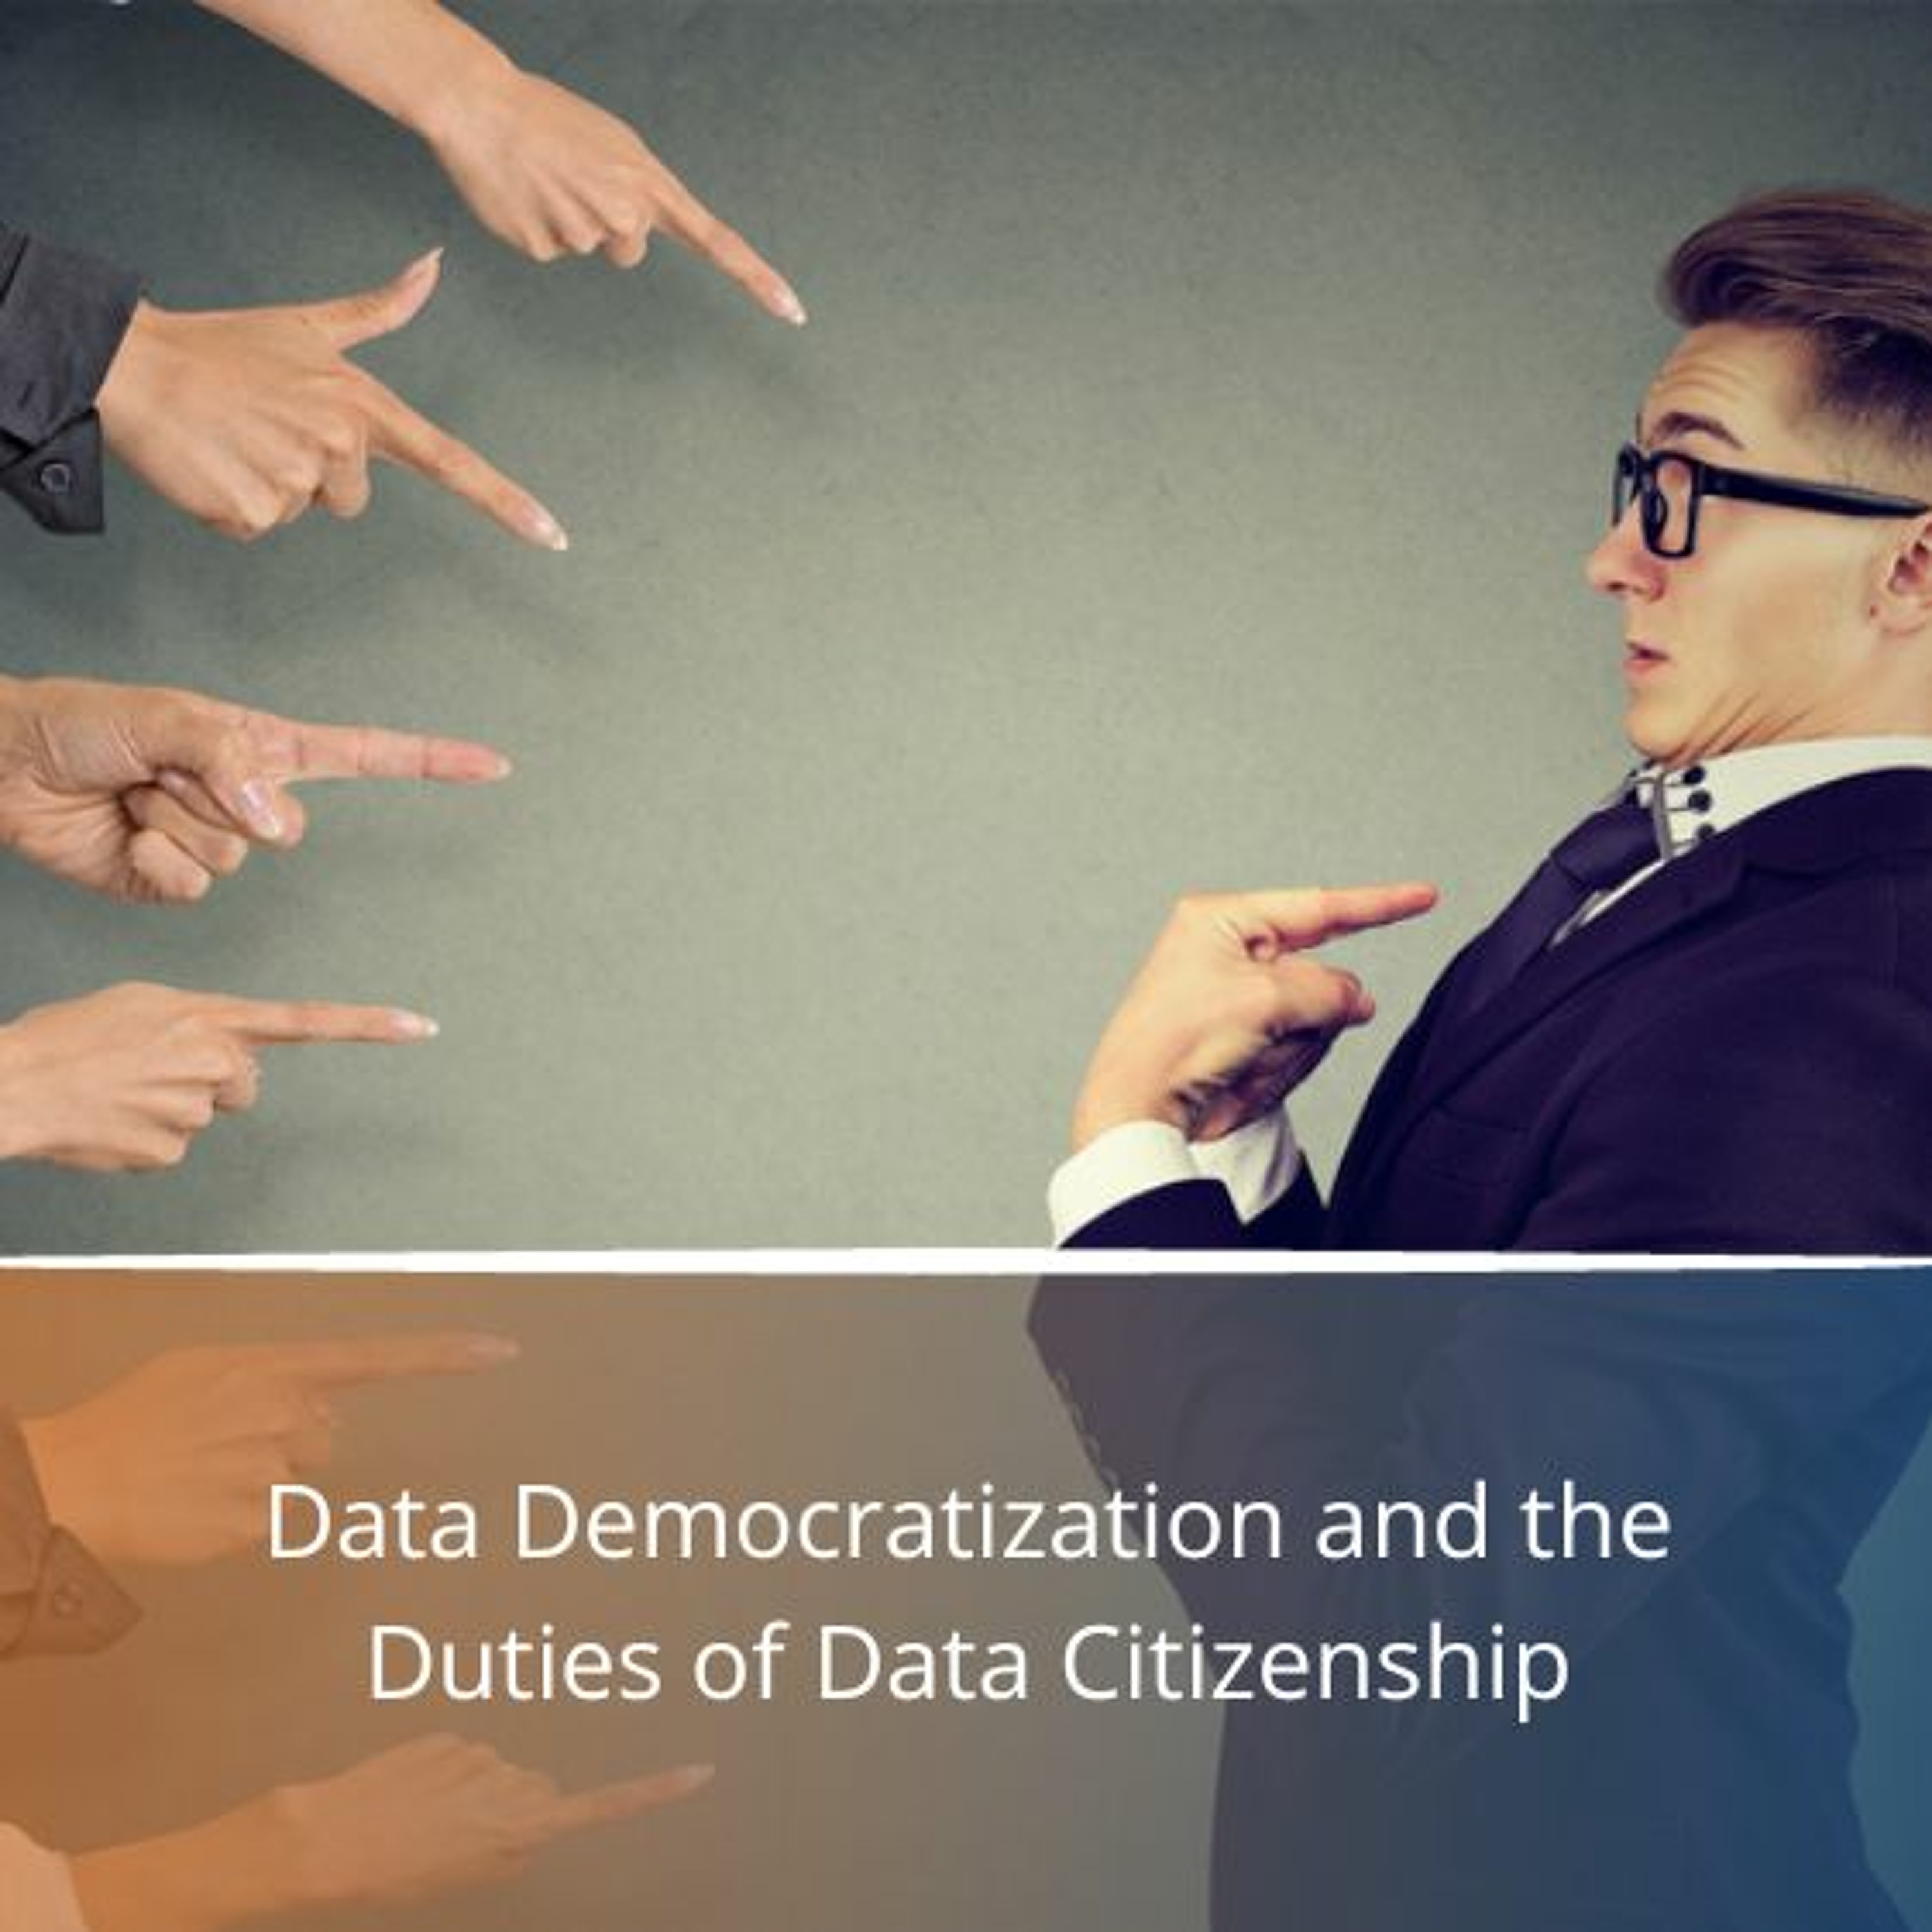 Data Democratization and the Duties of Data Citizenship - Audio Blog